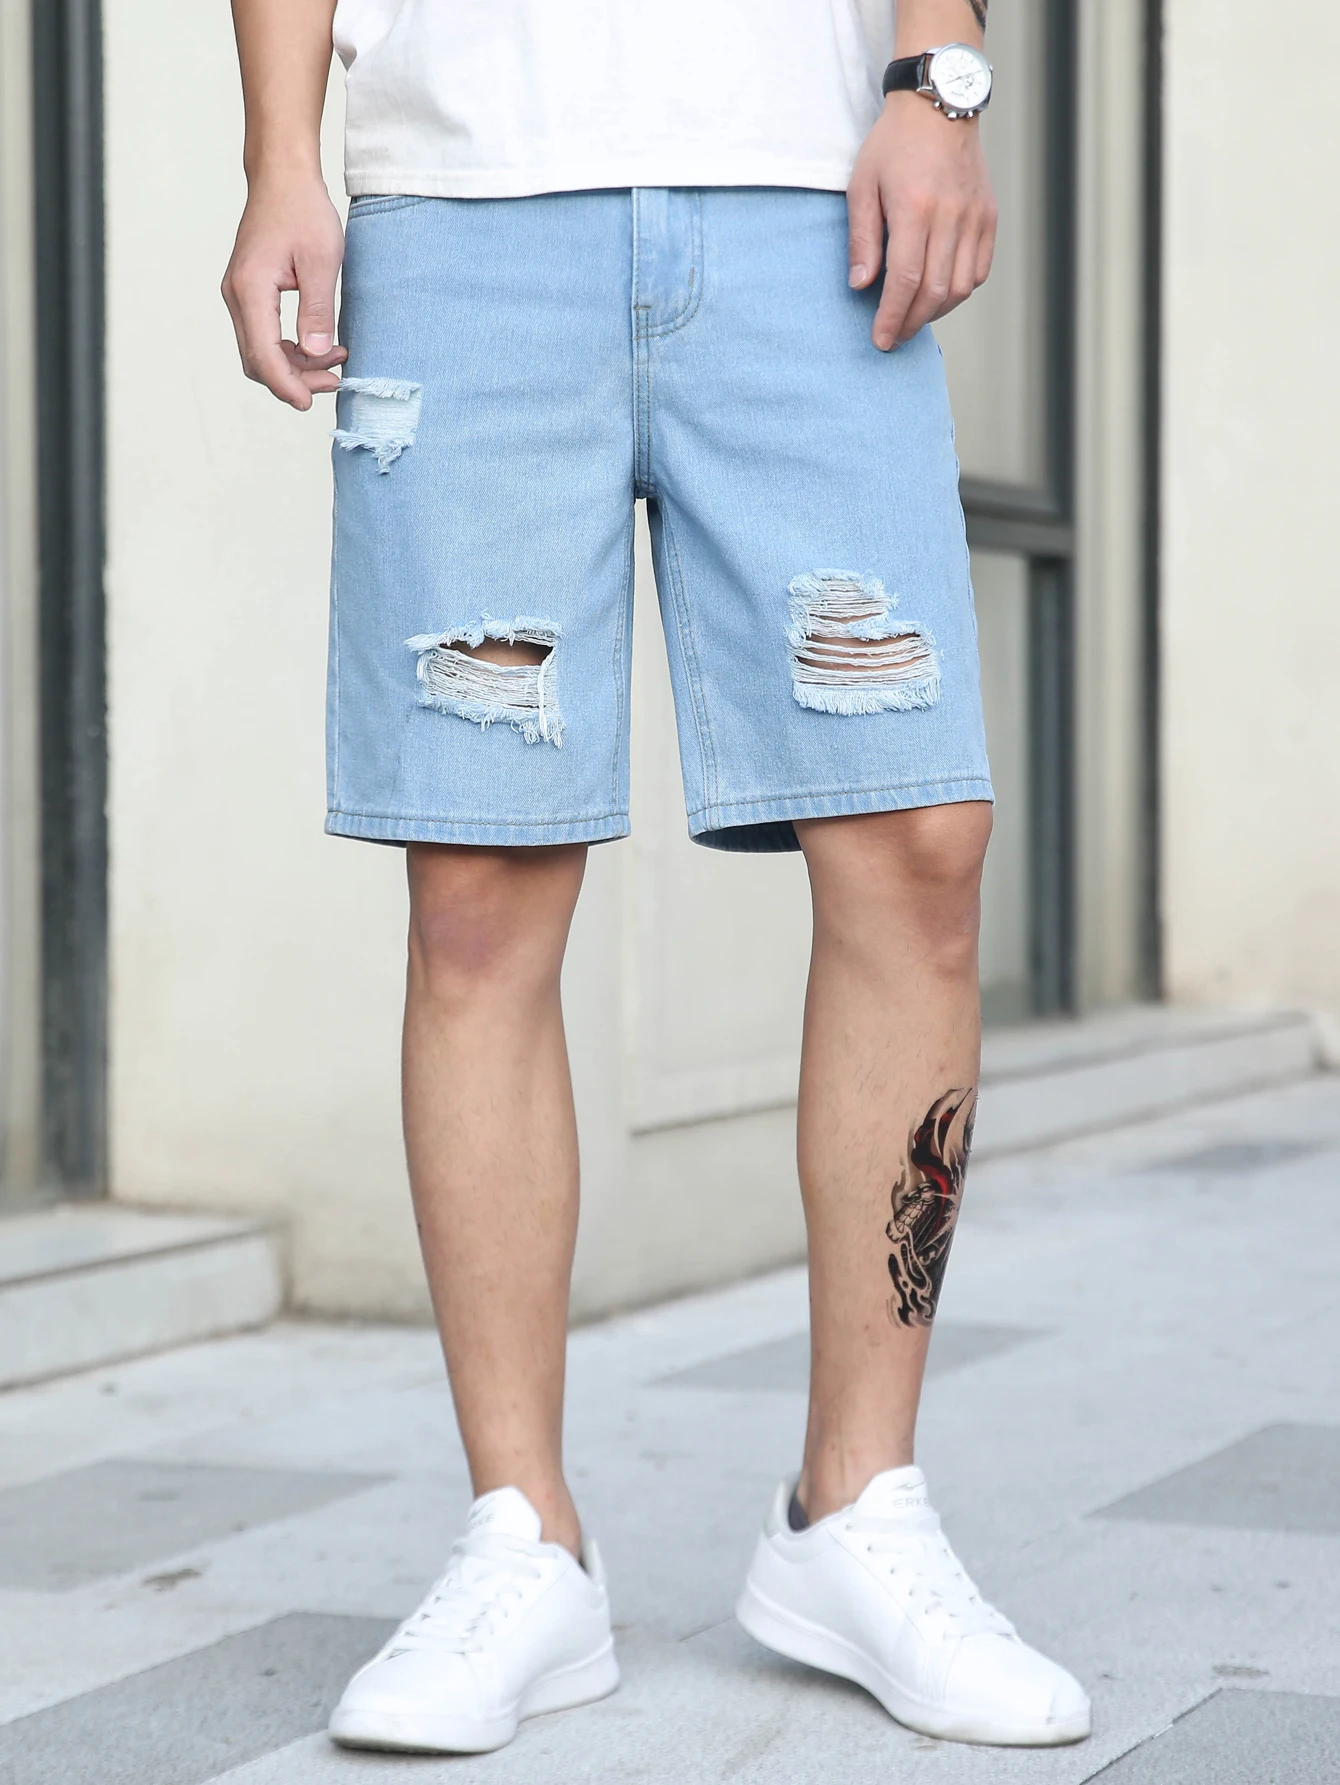 2022 Hot Sale New fashion personality casual men's ripped denim shorts cheap men's original jeans shorts